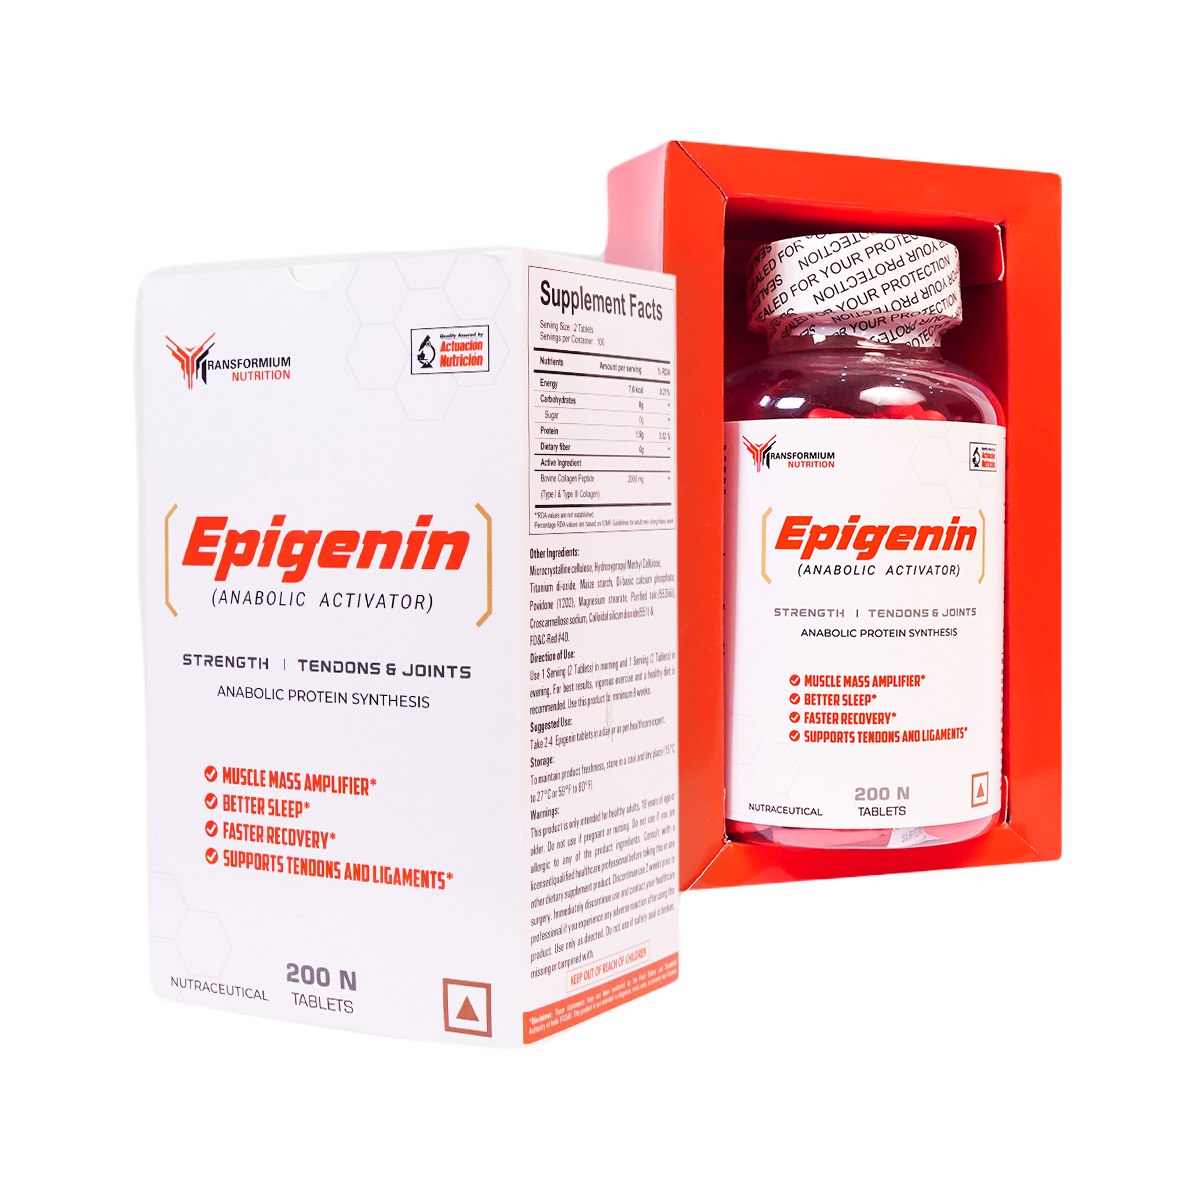 Epigenin (Anabolic Activator)